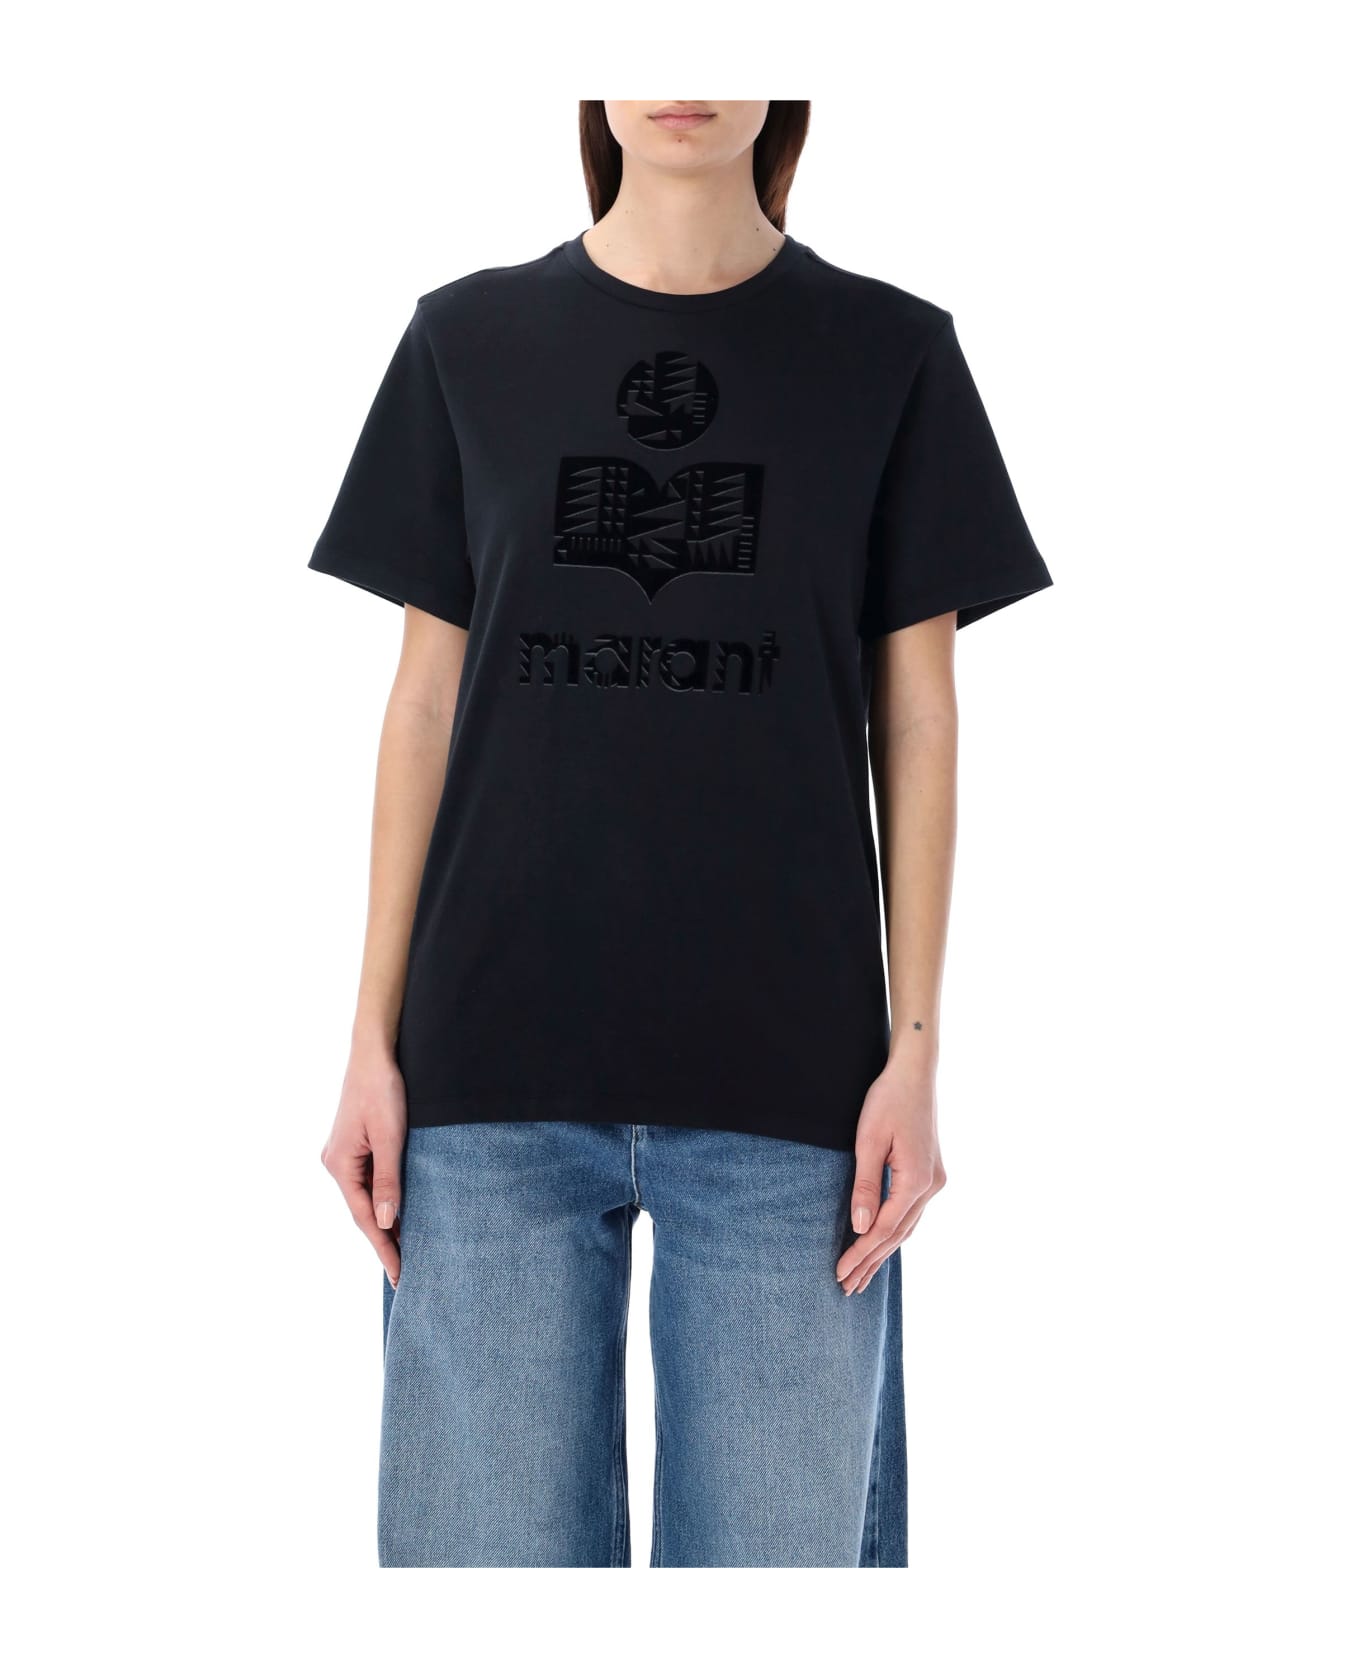 Marant Étoile Zewel T-shirt - Black